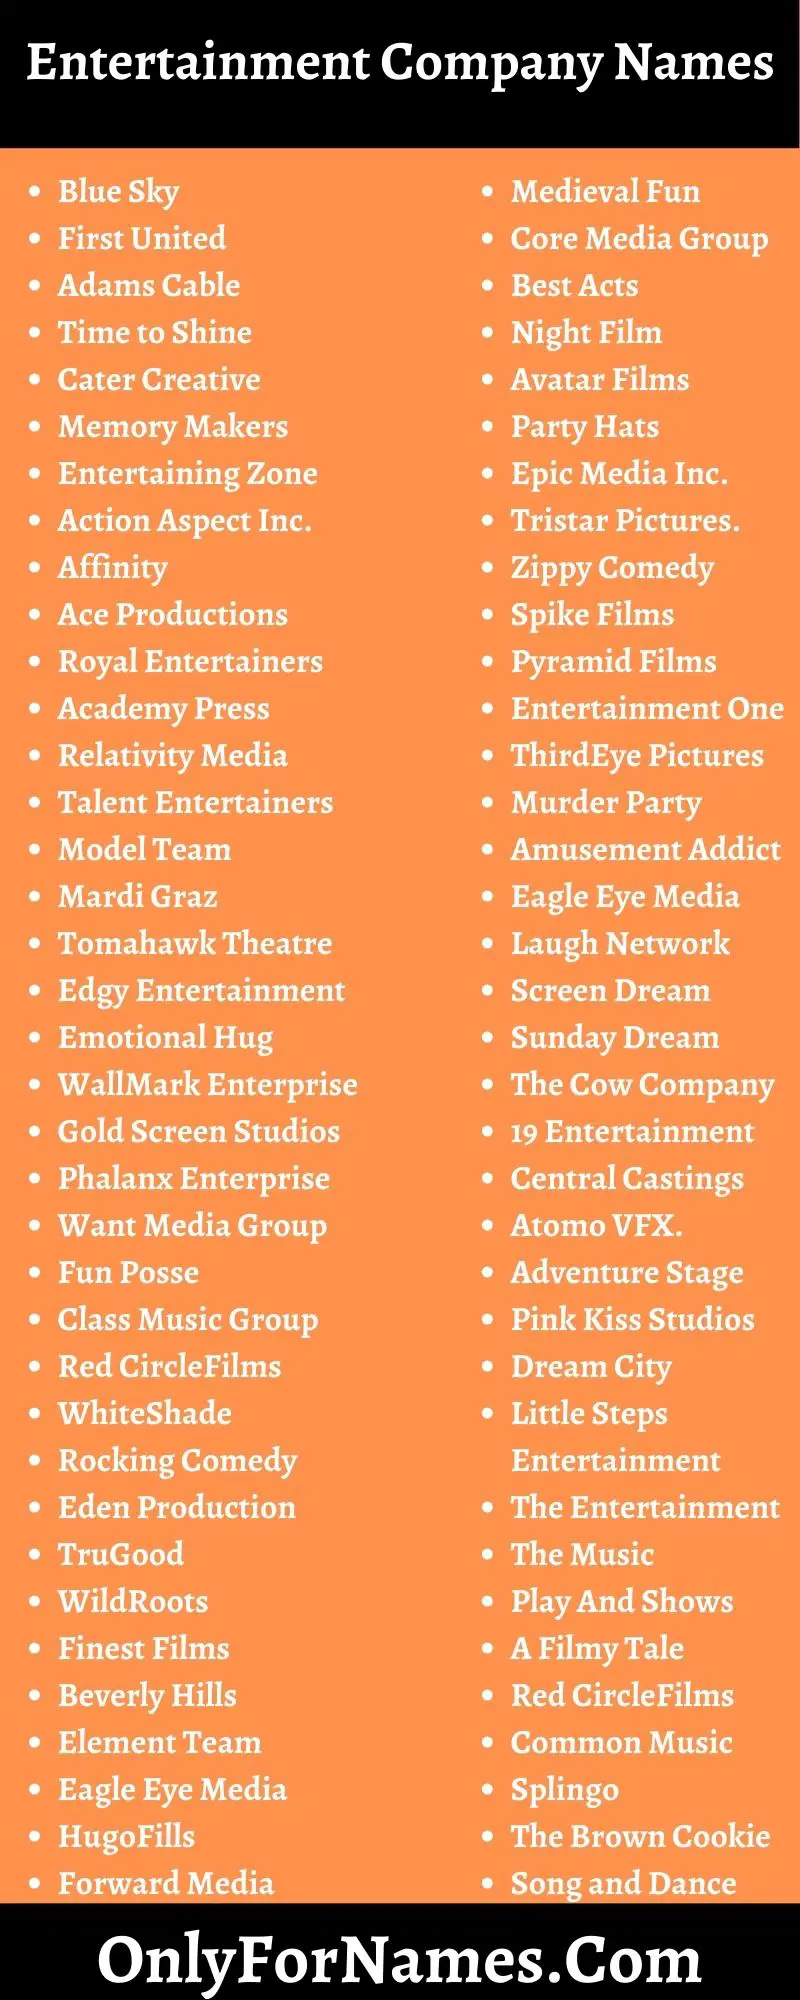 Entertainment Company Names